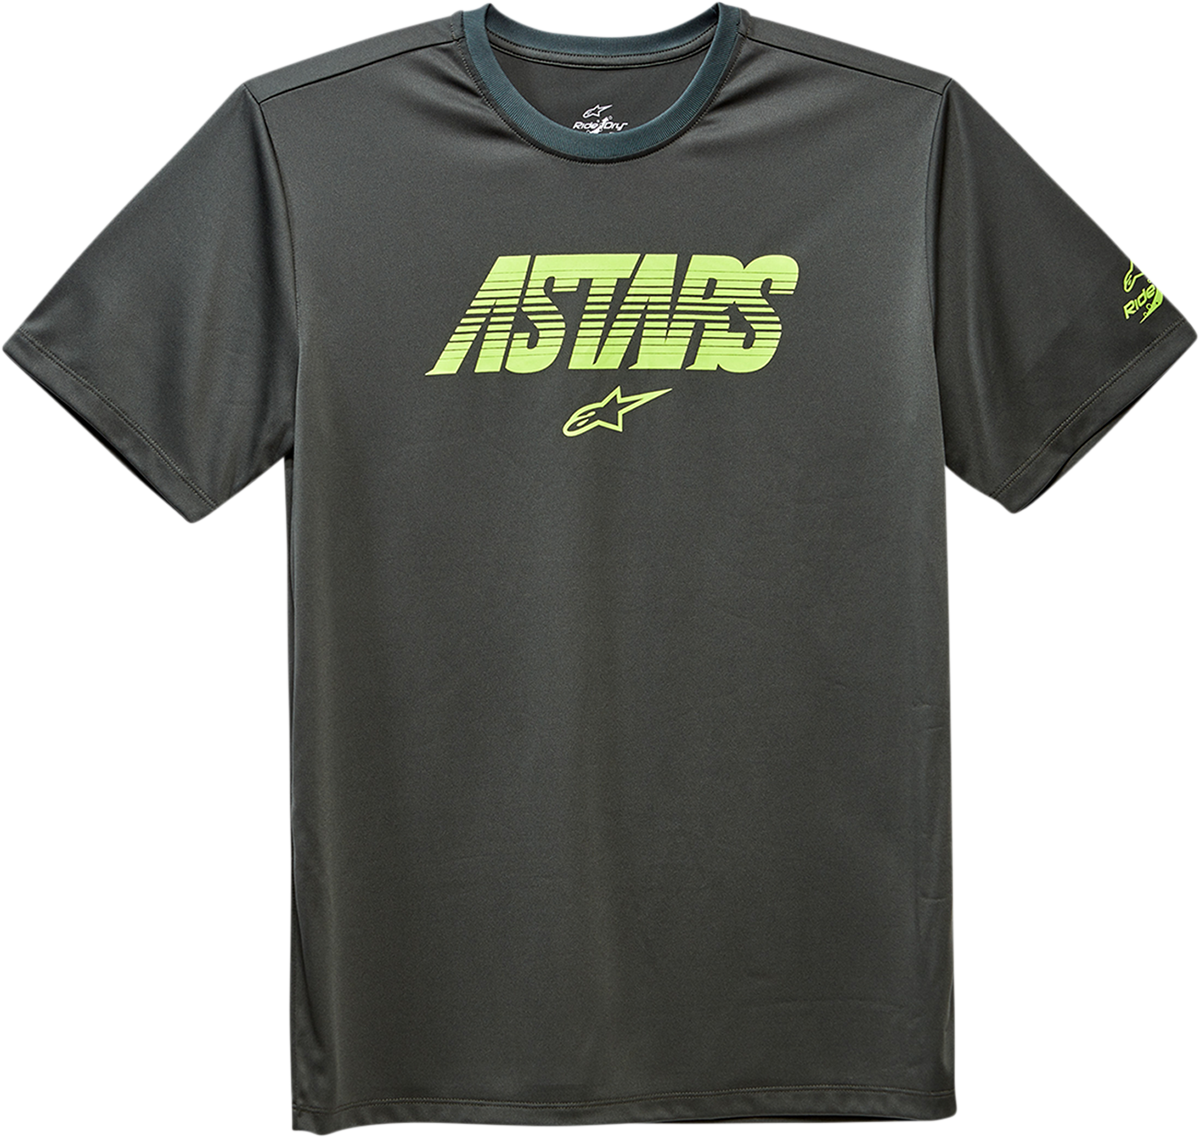 ALPINESTARS Tech Angle Premium T-Shirt - Spruce - Large 121073220635L